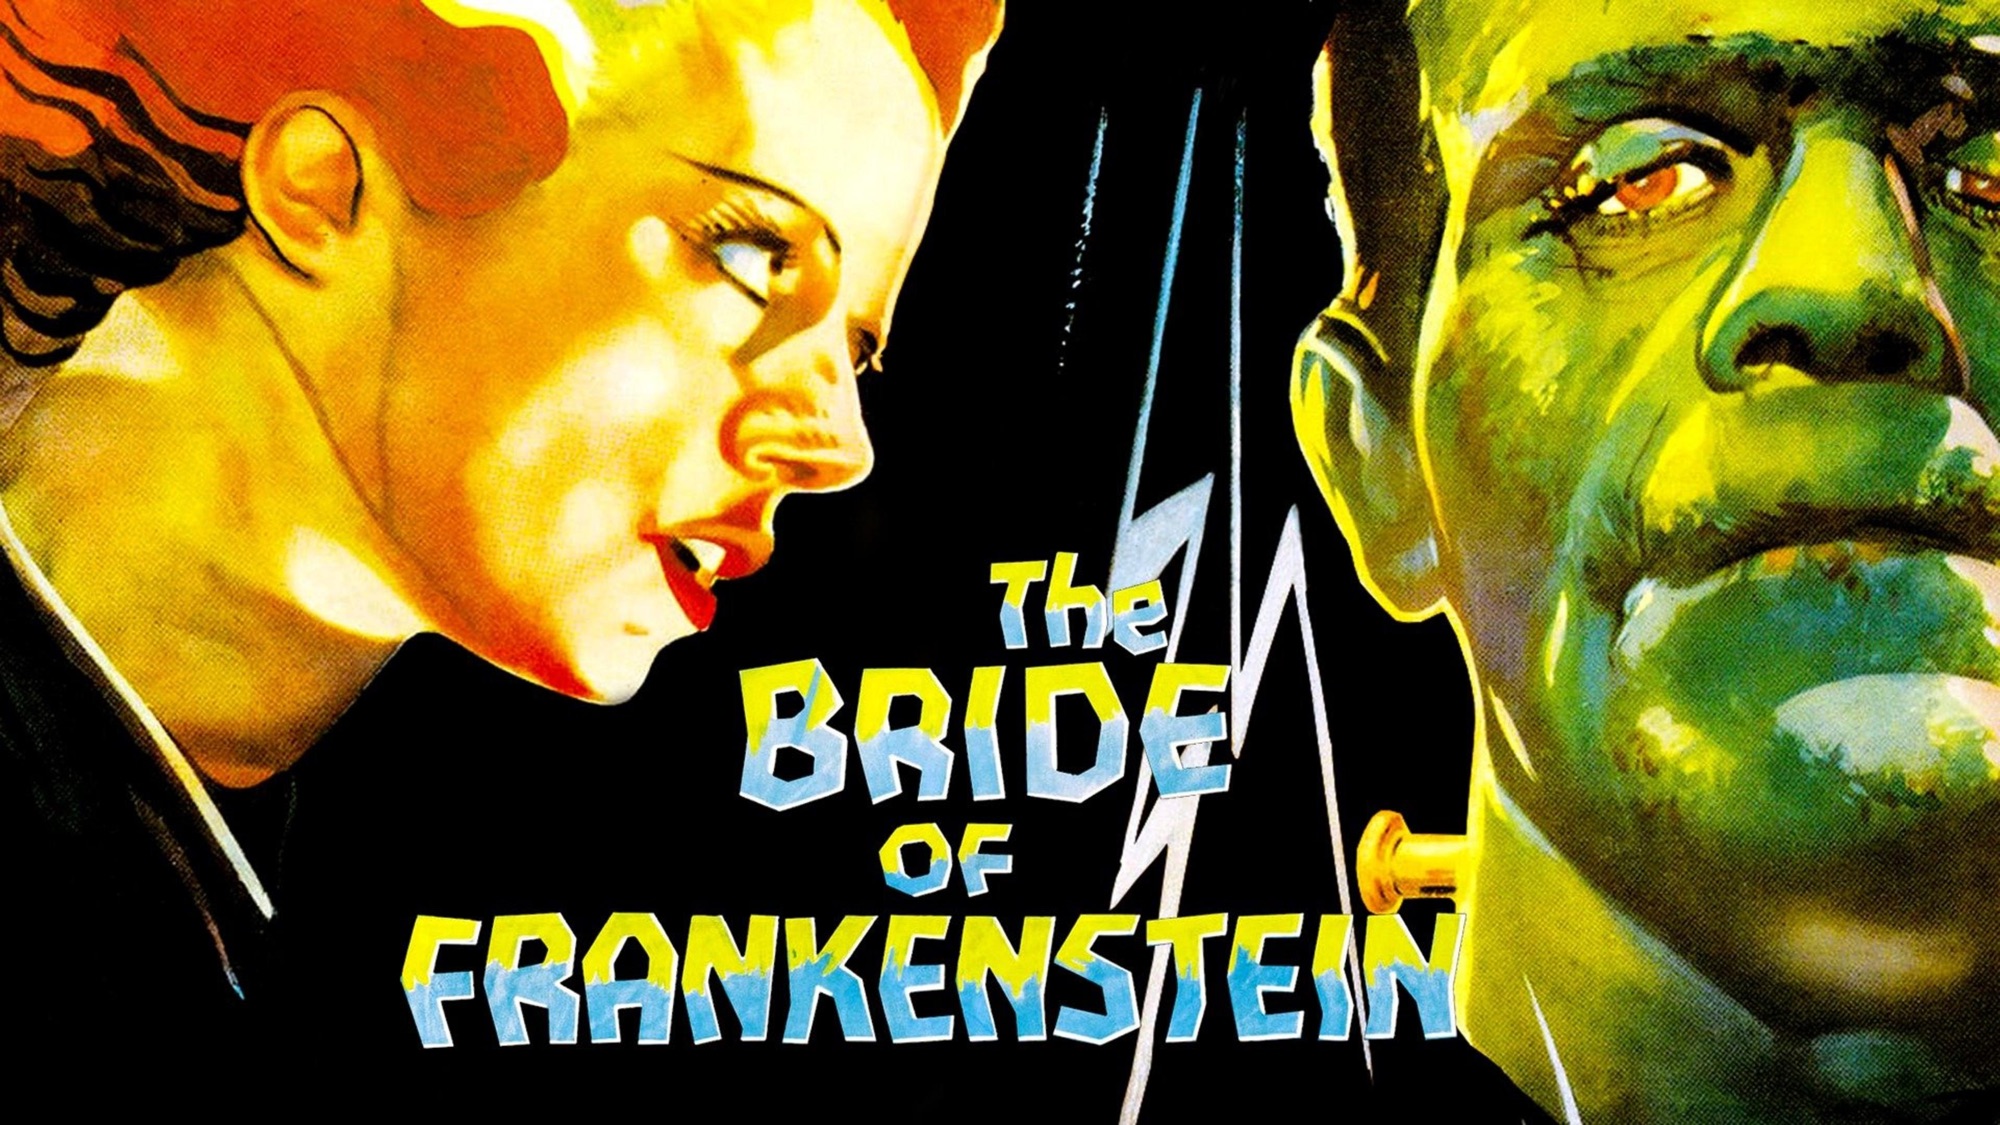 Movie The Bride of Frankenstein HD Wallpaper Background Image. 